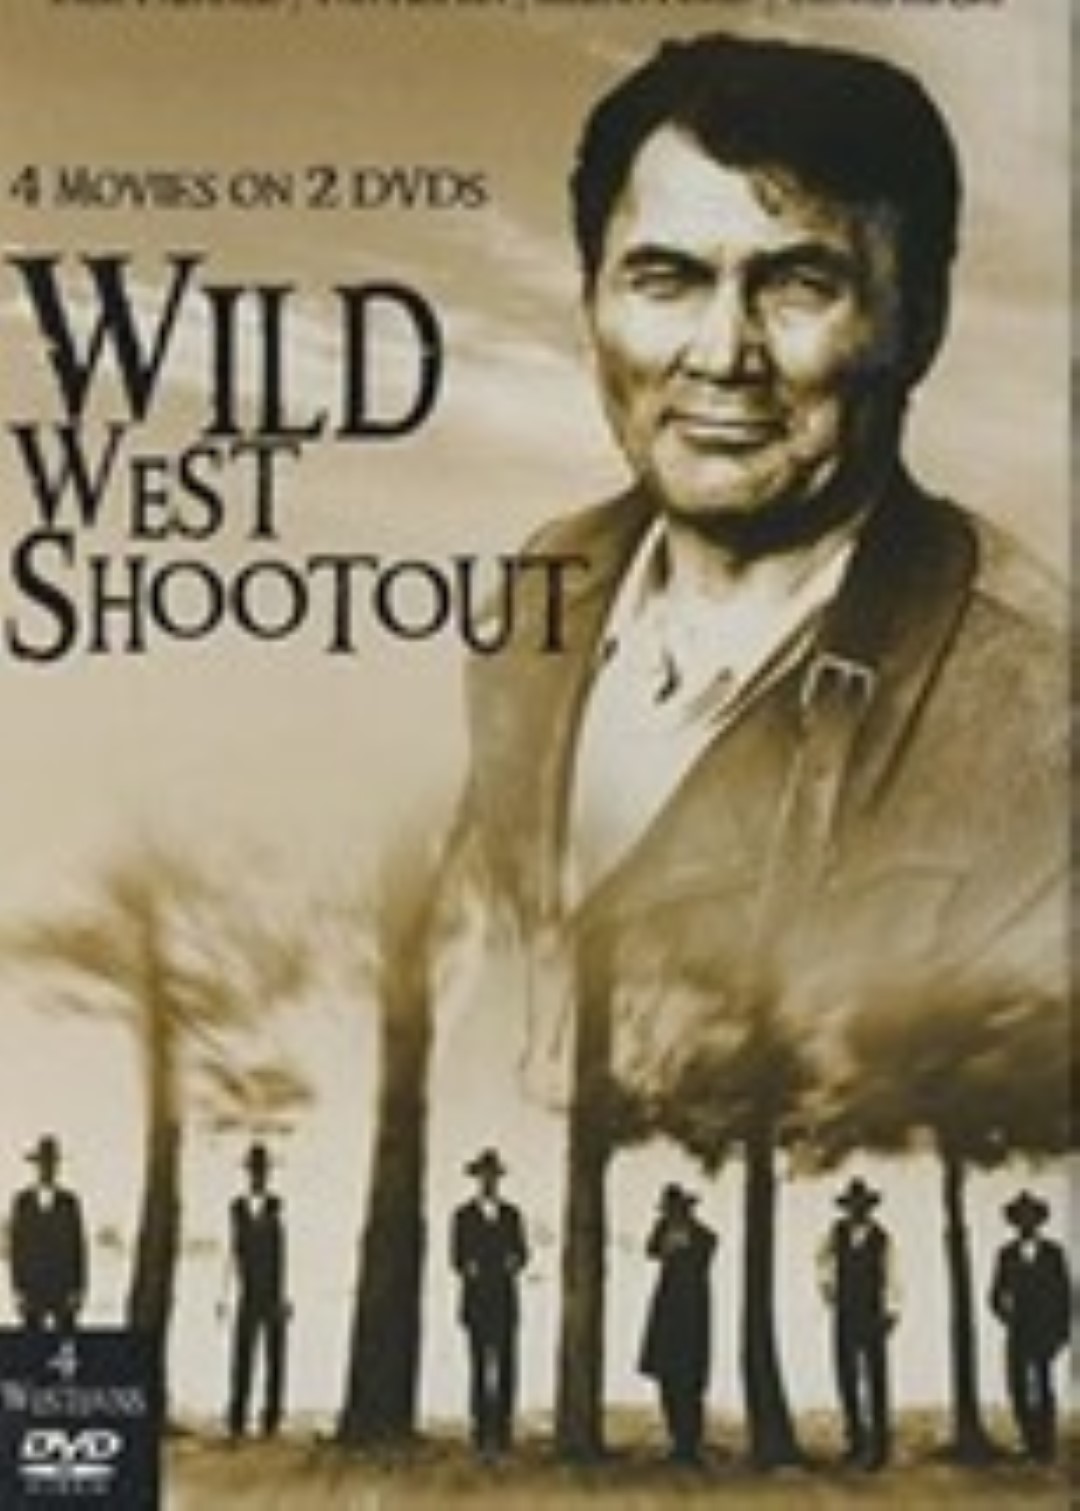 Wild west shootout 4 movie pack  large 